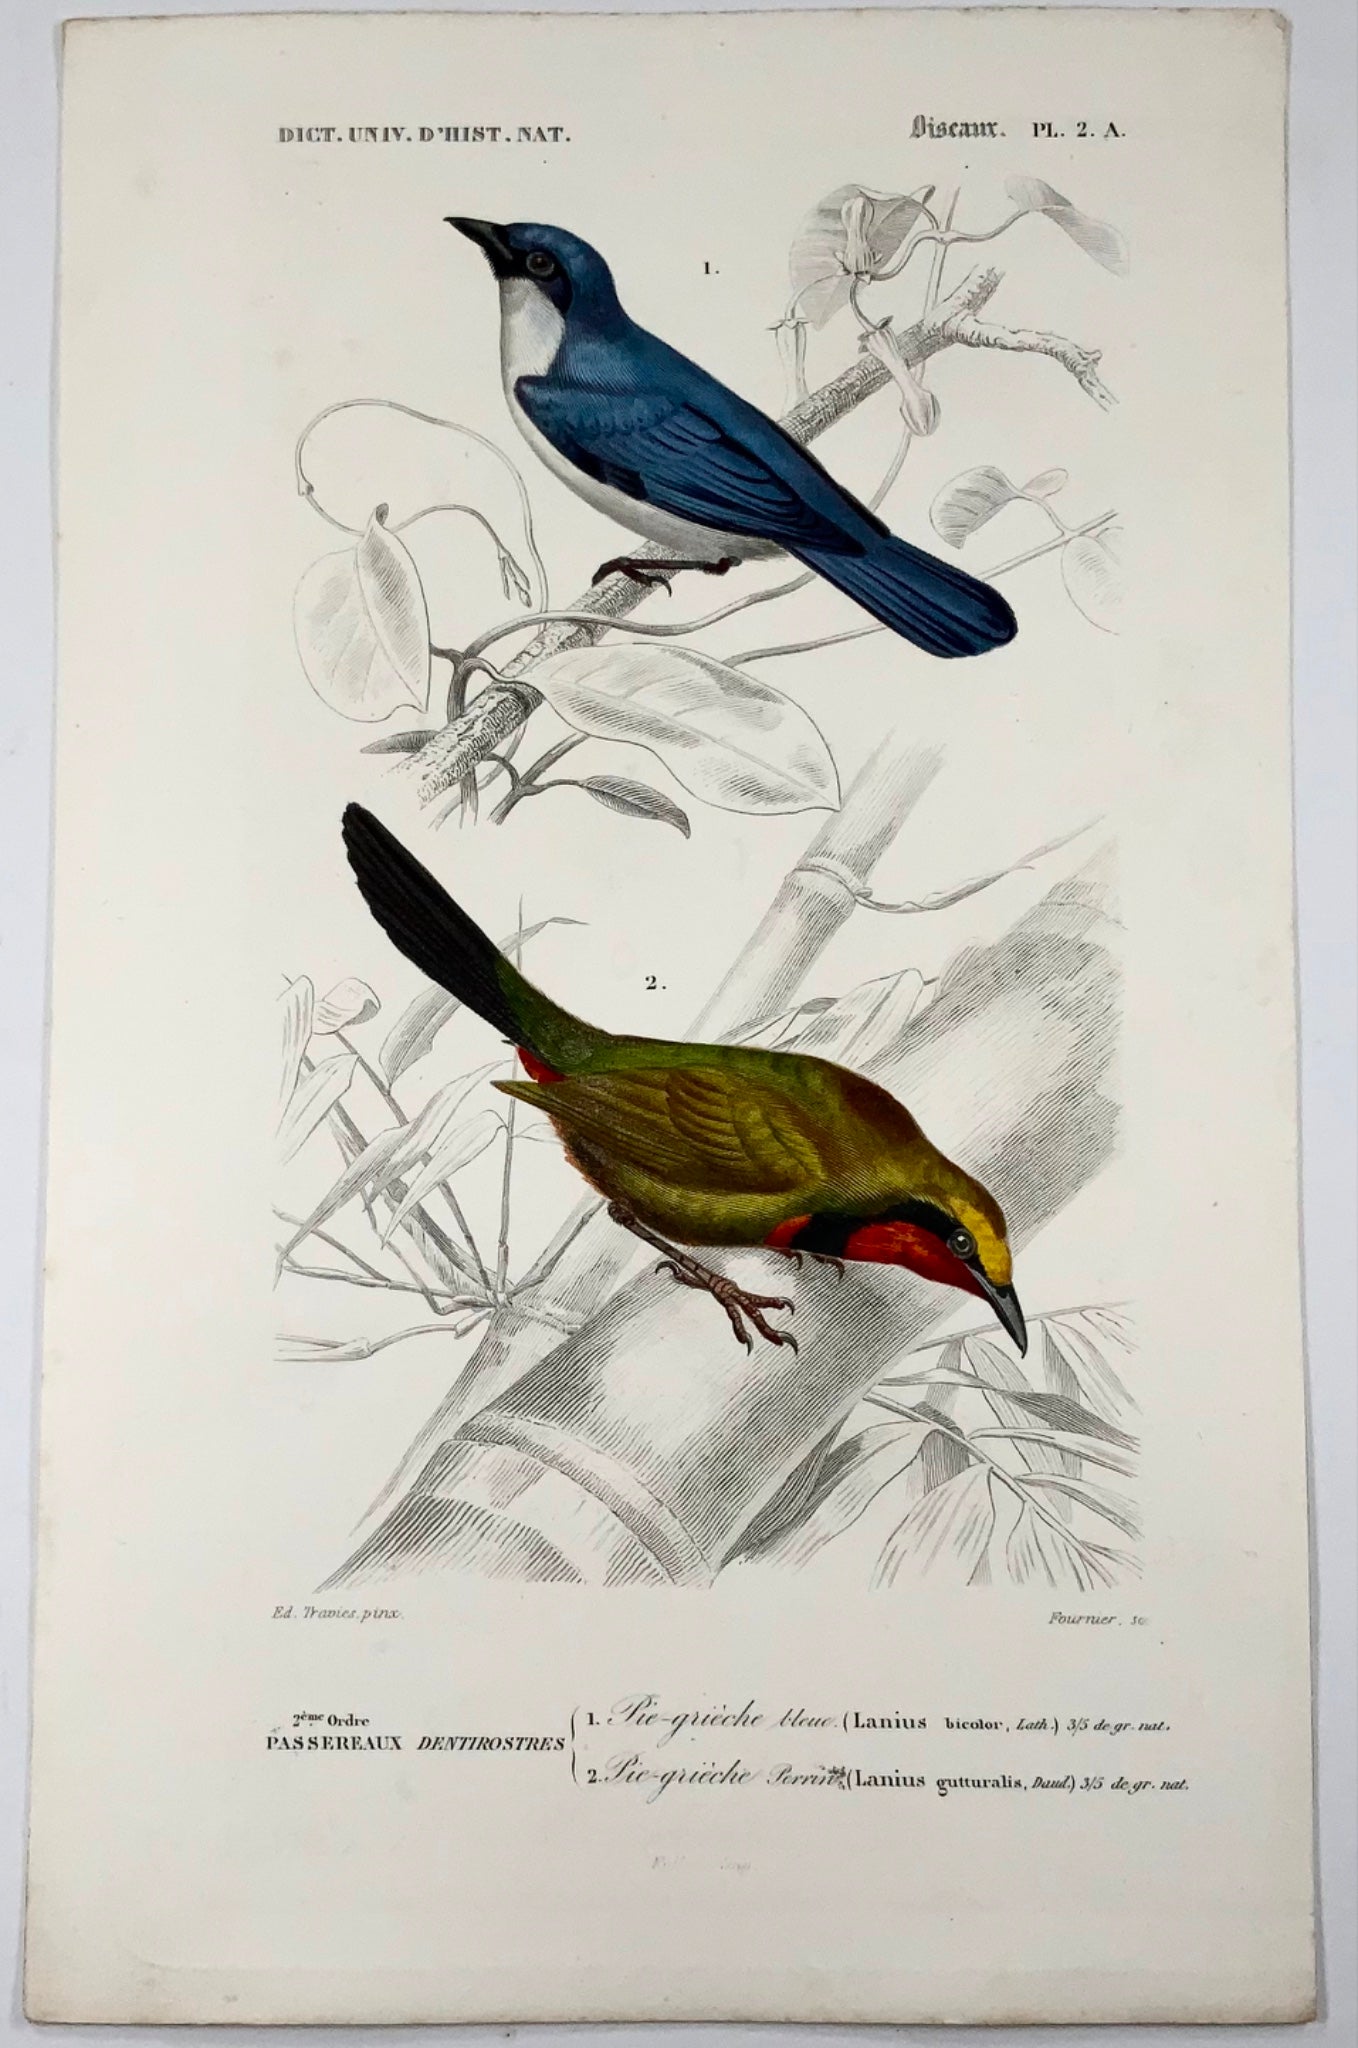 1840 Shrikes, ornithology, Ed Travies, hand colour, engraving, mammals